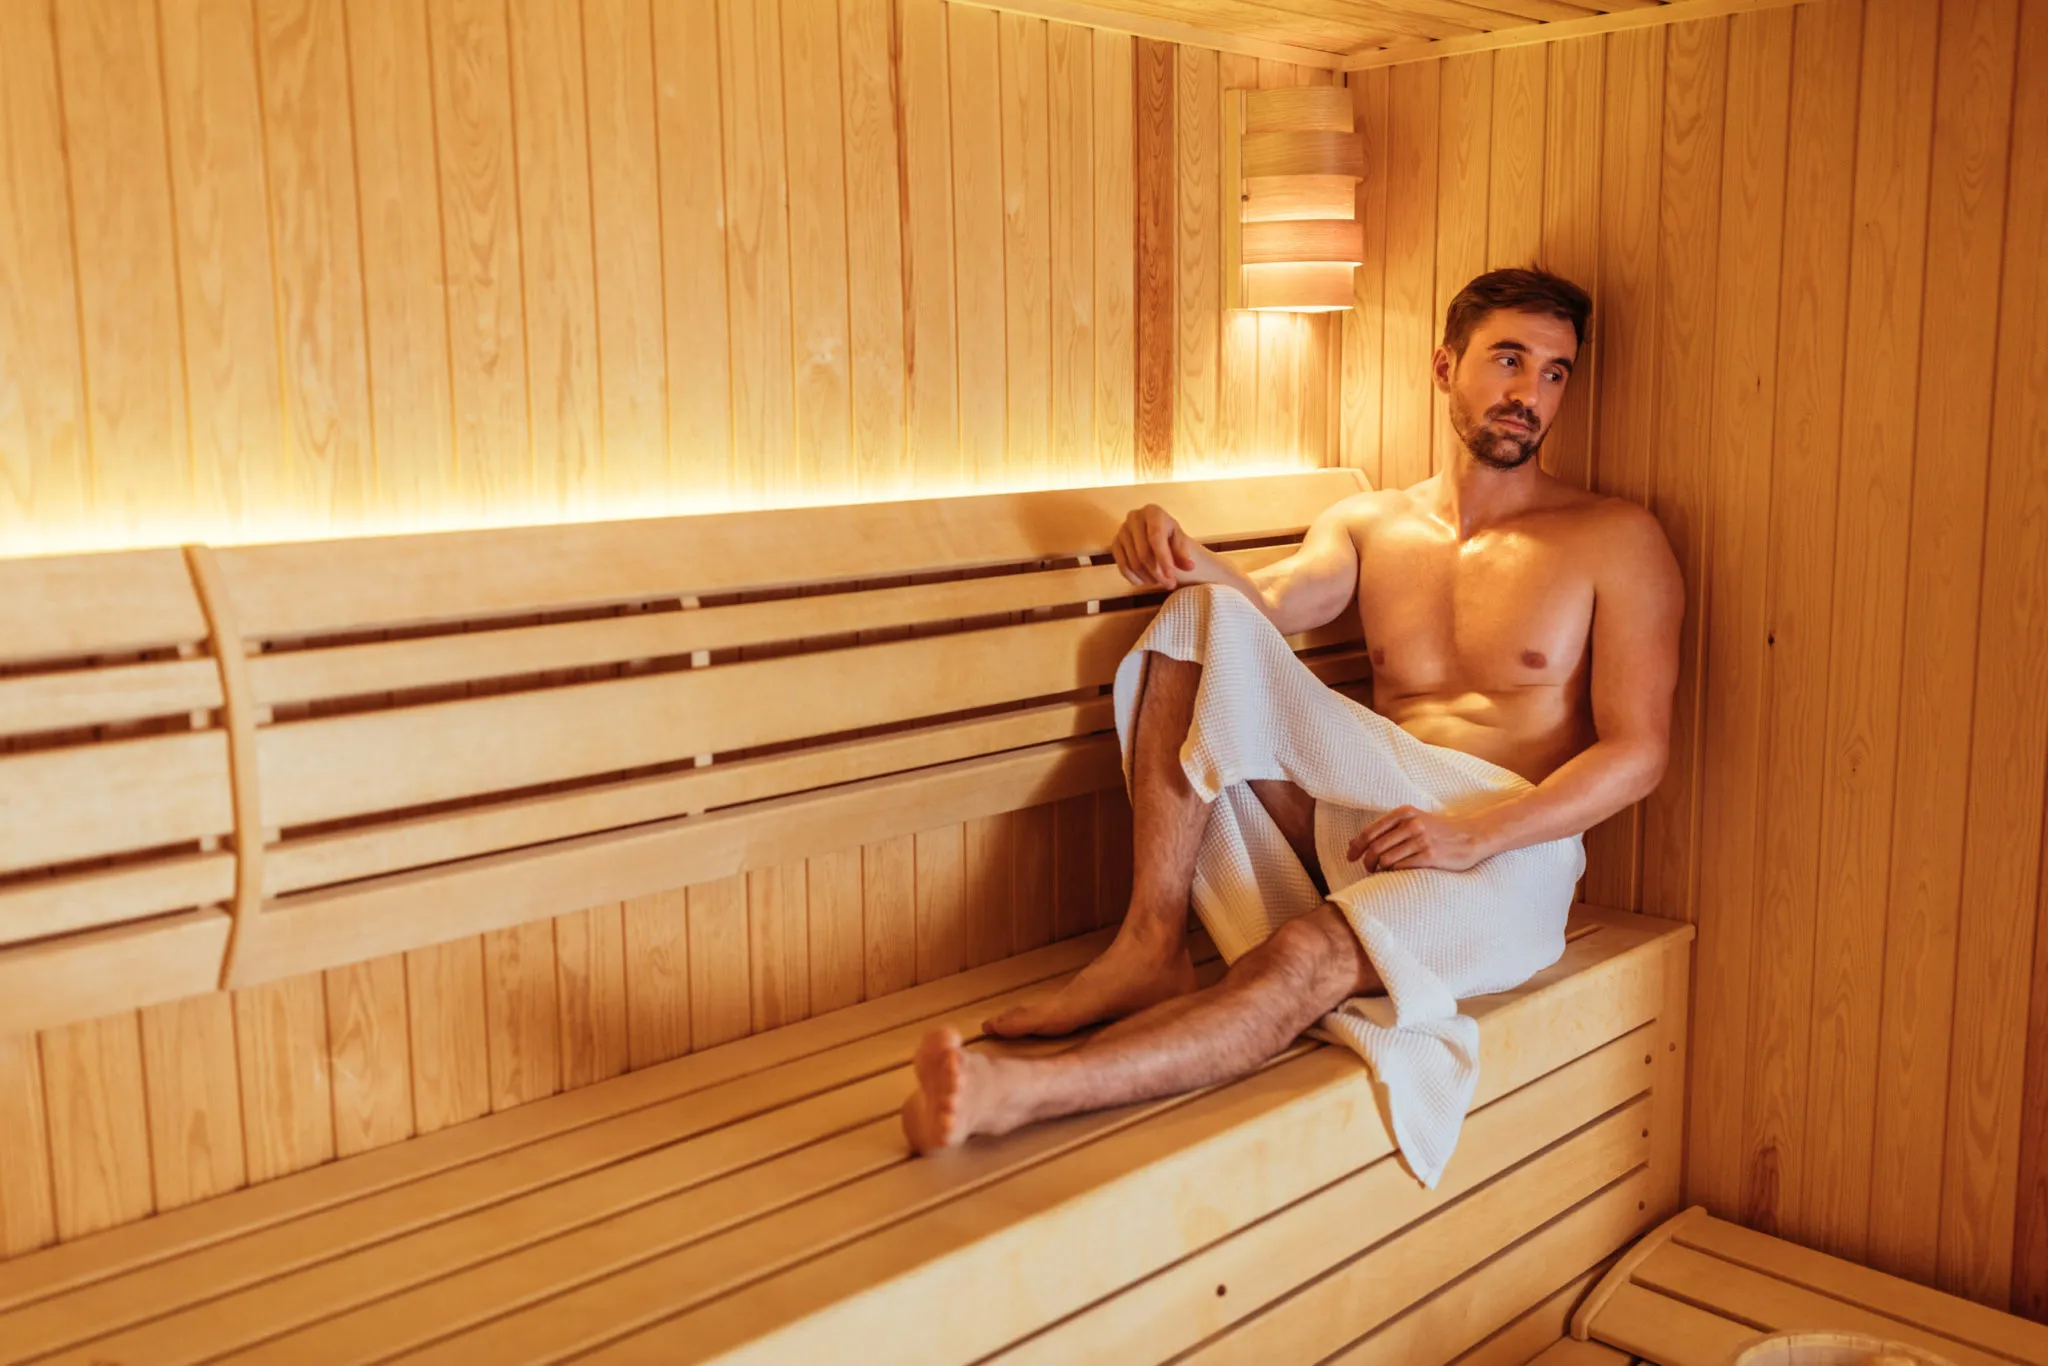 Historic gay sauna faces threat of closure. 